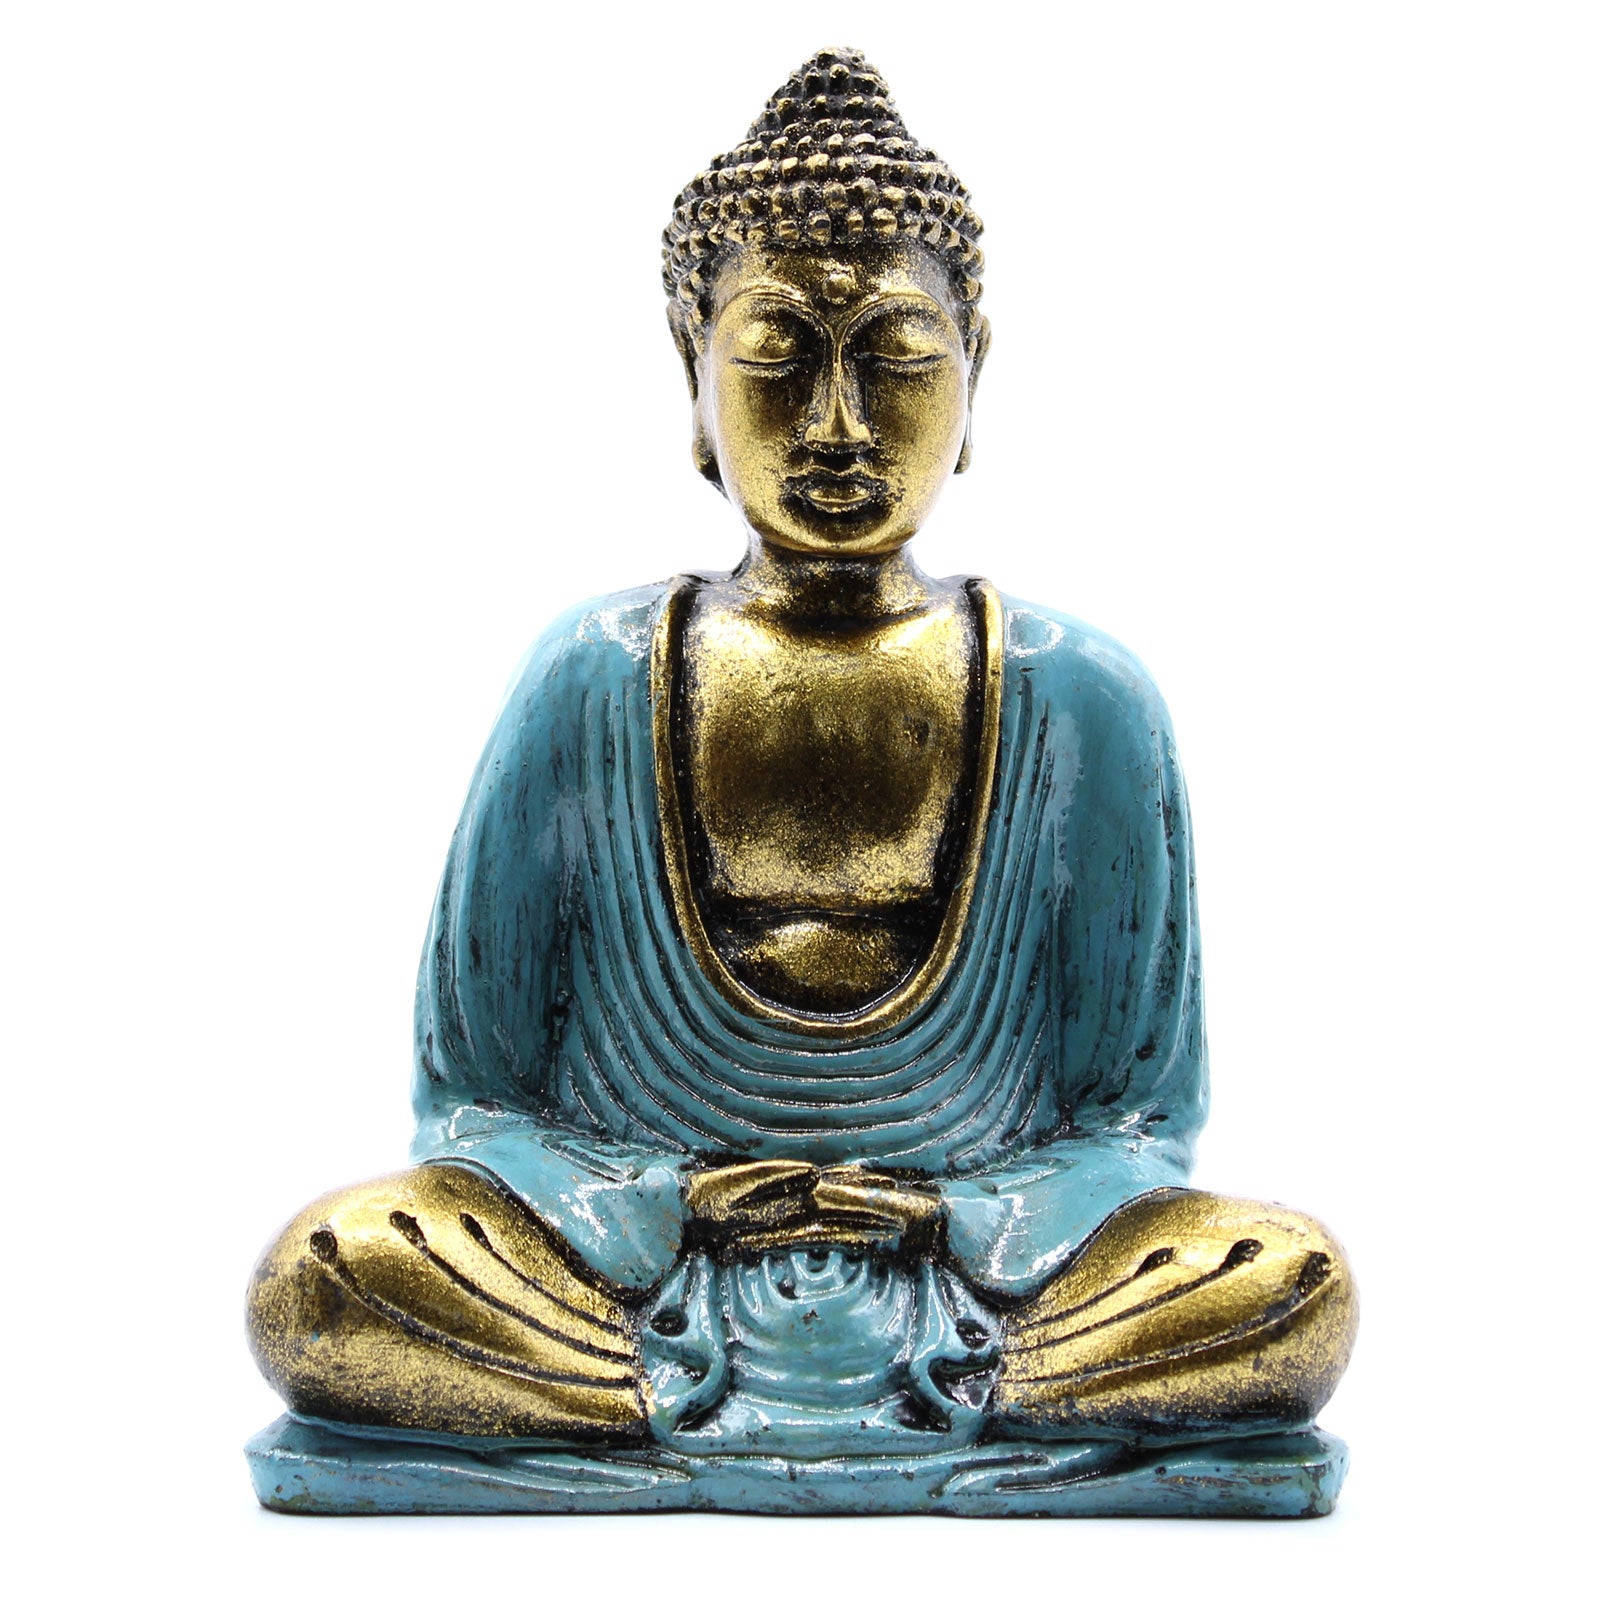 View Teal Gold Buddha Medium information